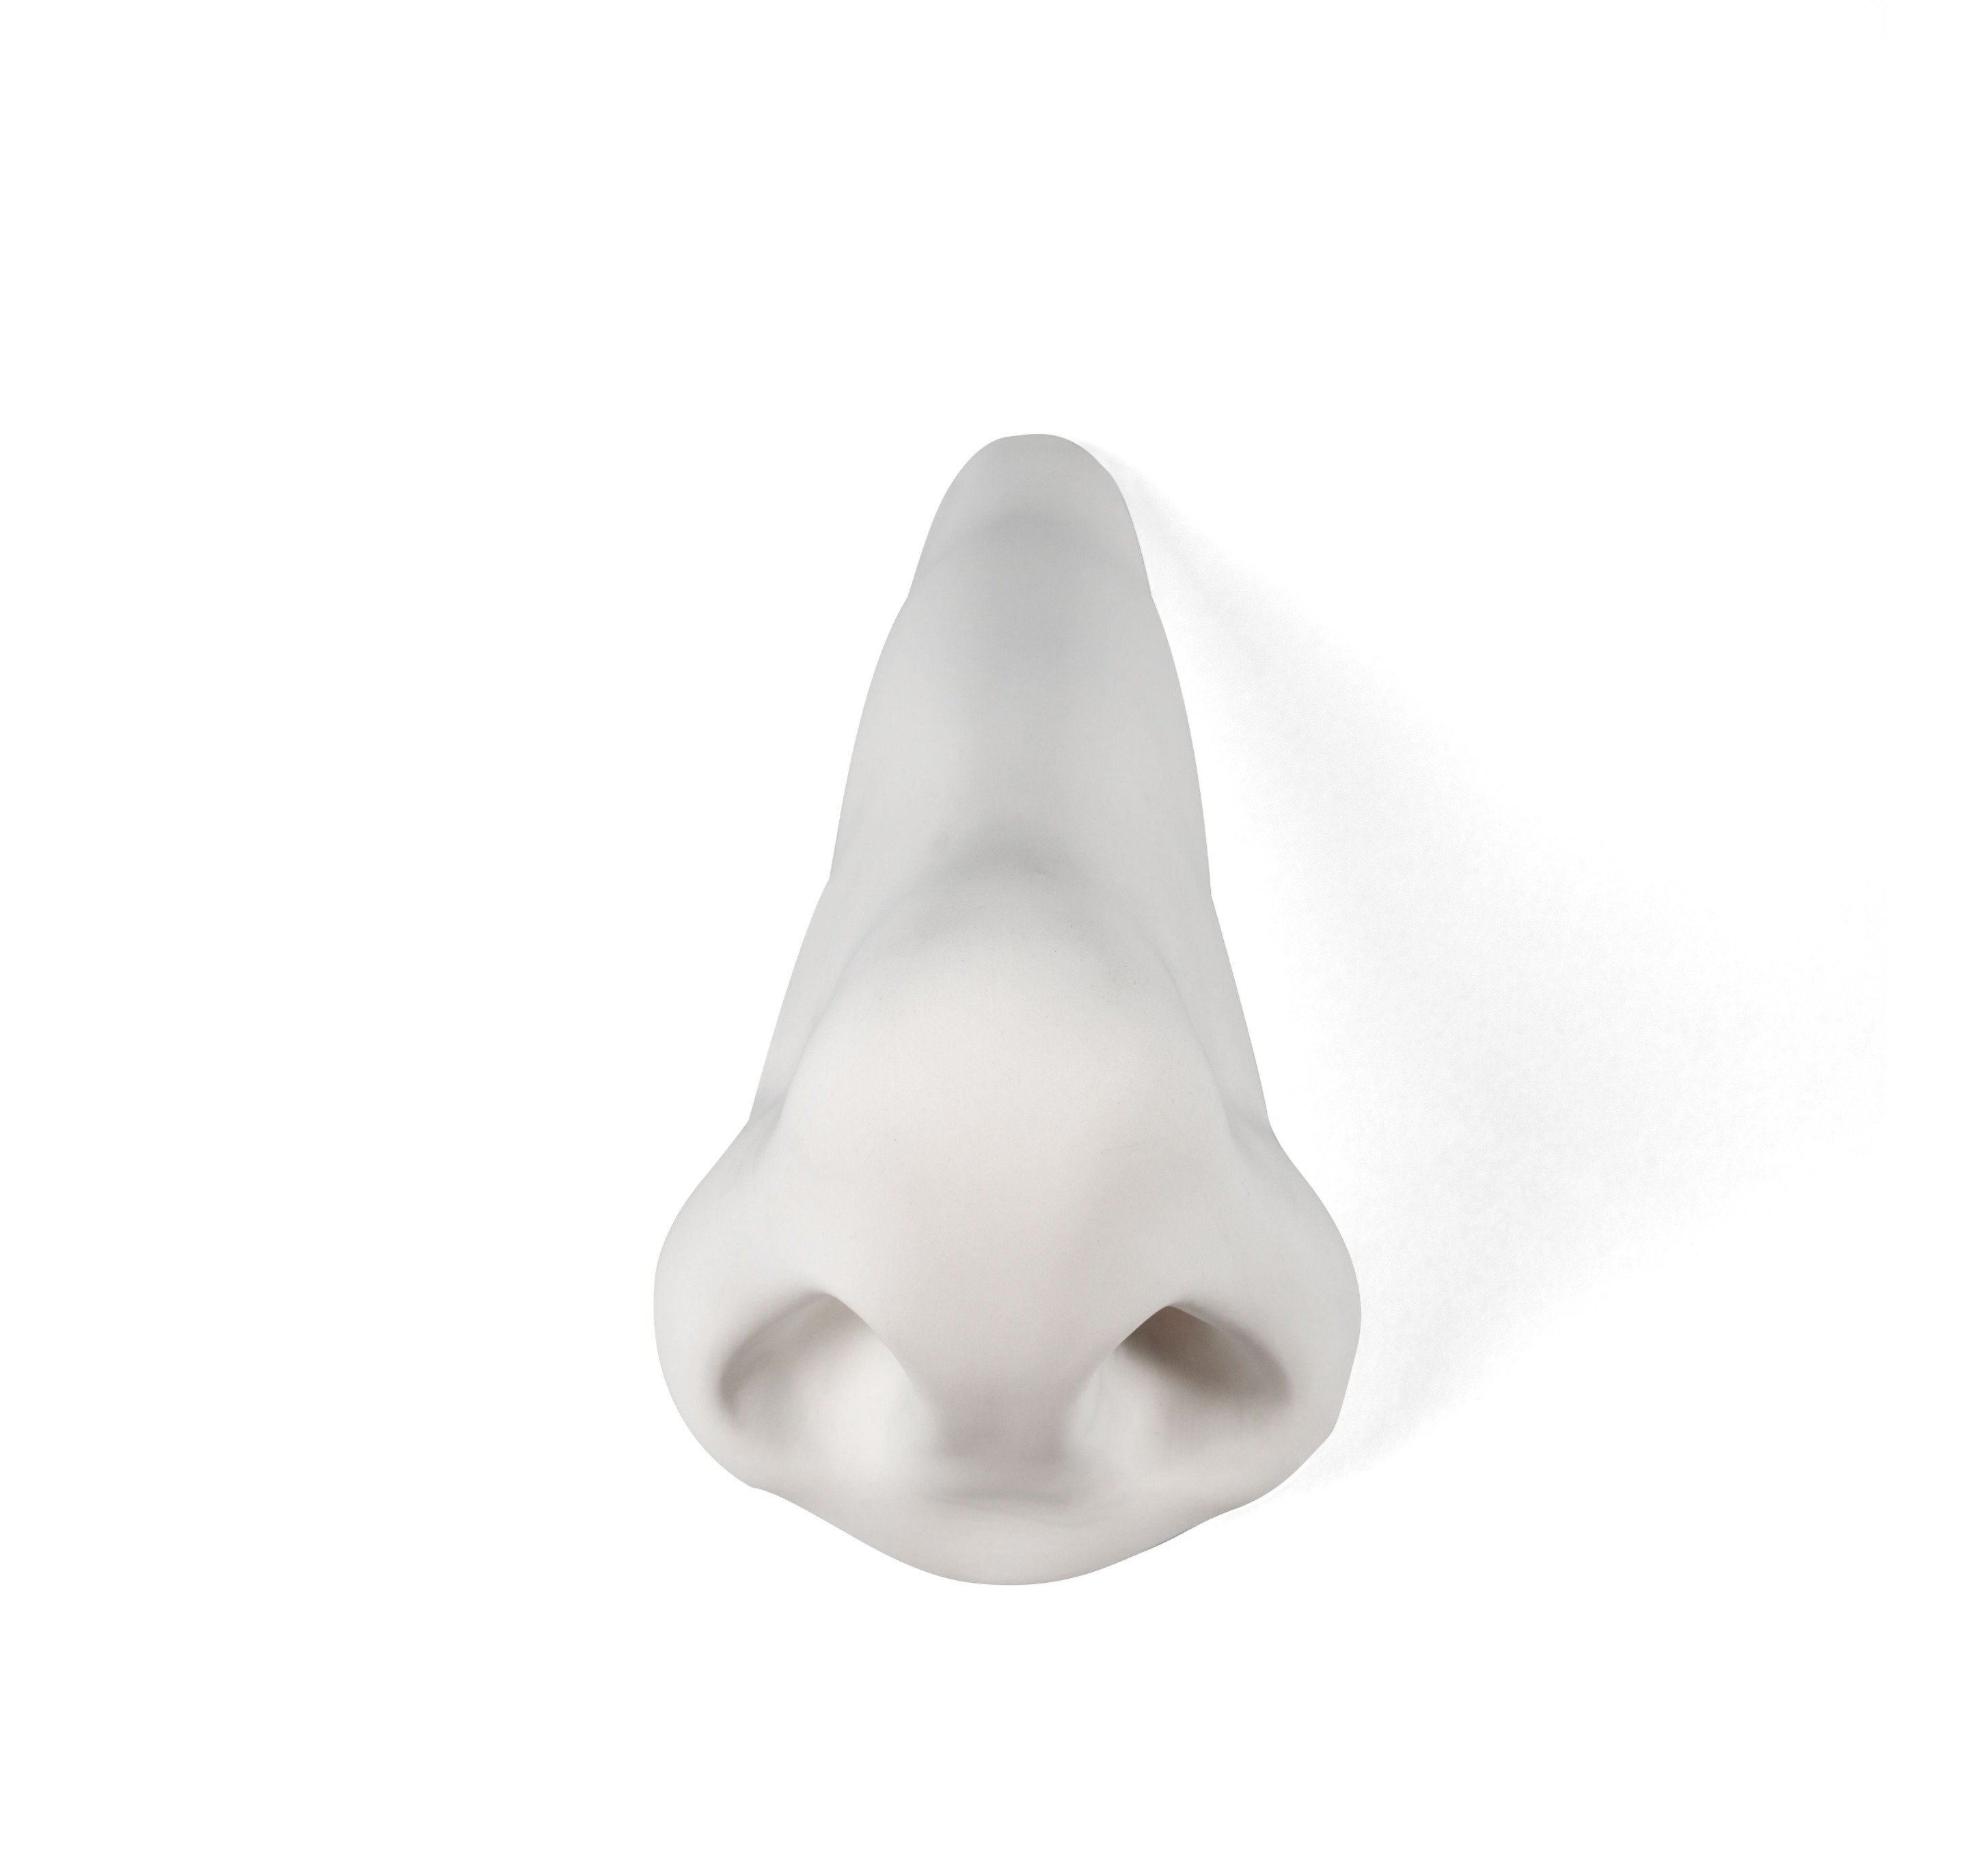 Seletti White Porcelain Nose Sculpture